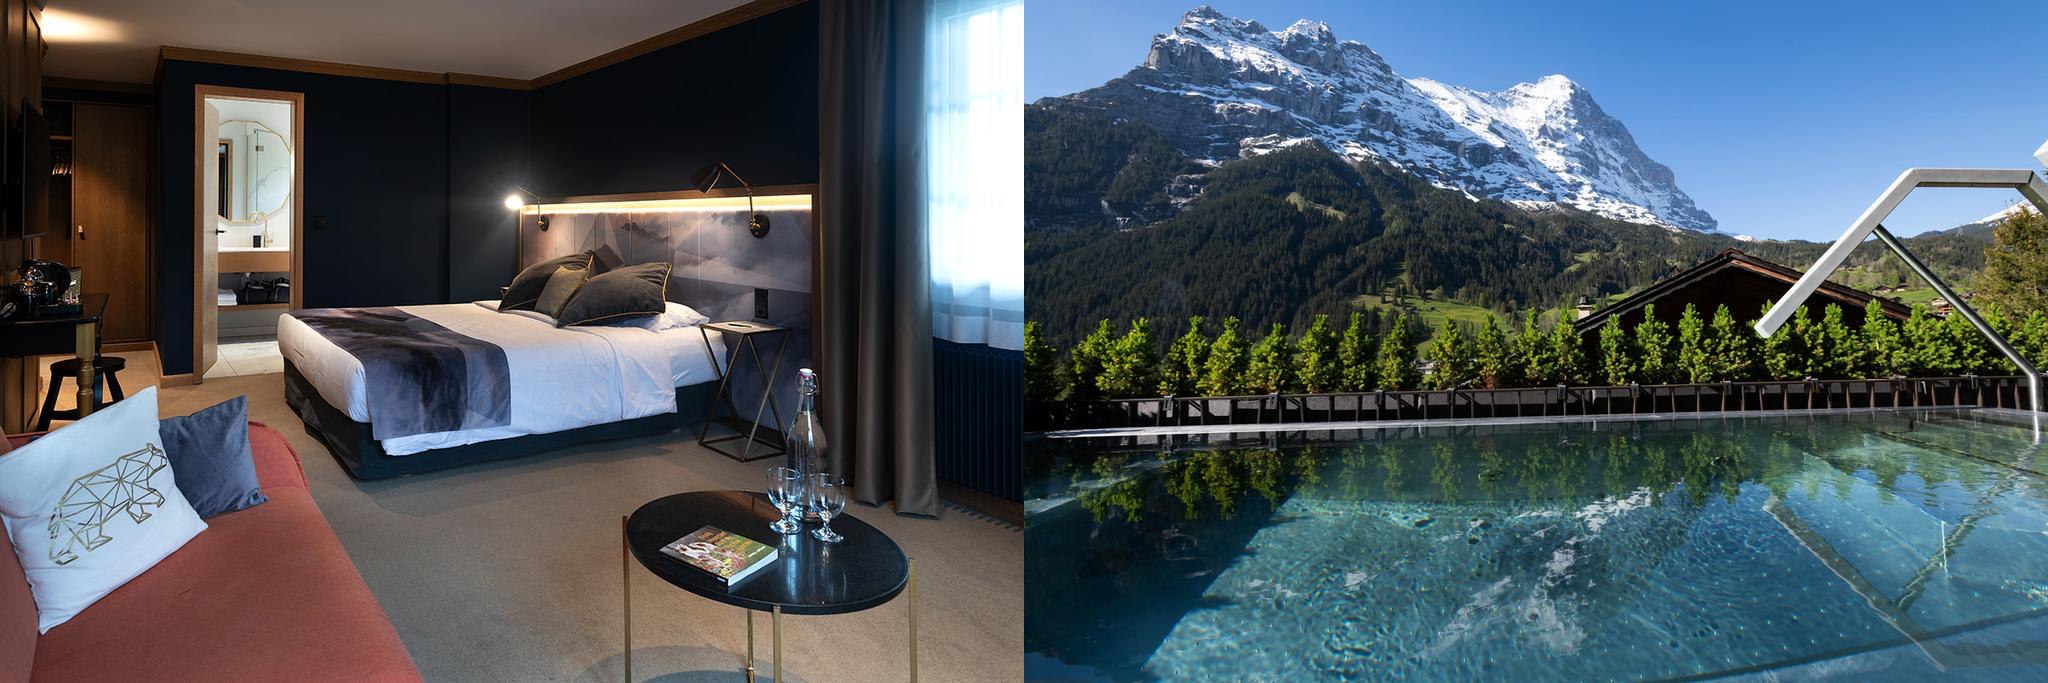 Boutique Hotel Glacier, 冰川精品酒店, 格林德瓦飯店, 瑞士飯店, Grindelwald Hotel